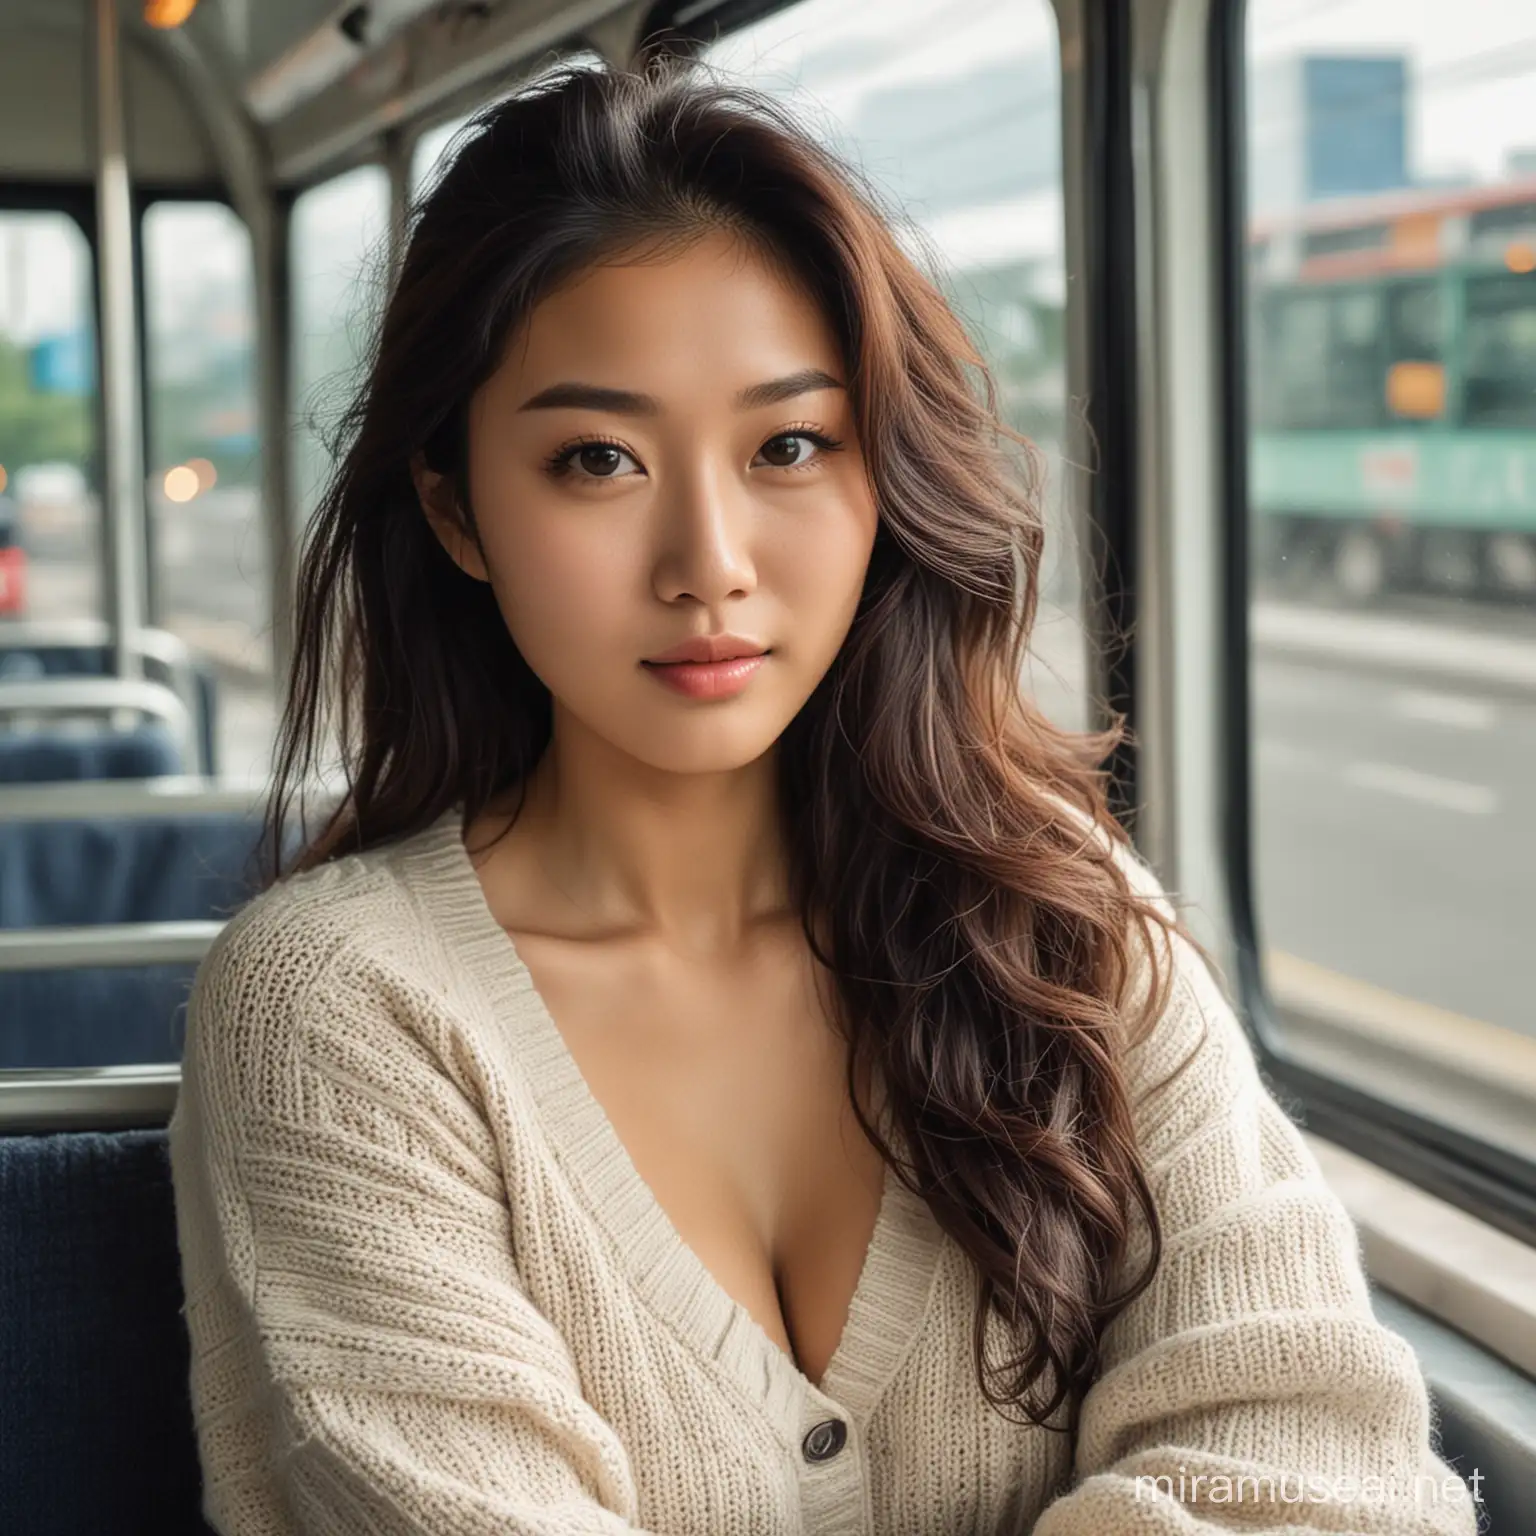 A beauty asian woman, nice boobs, wavy hair, knit clothe, sitting, inside bus, morning